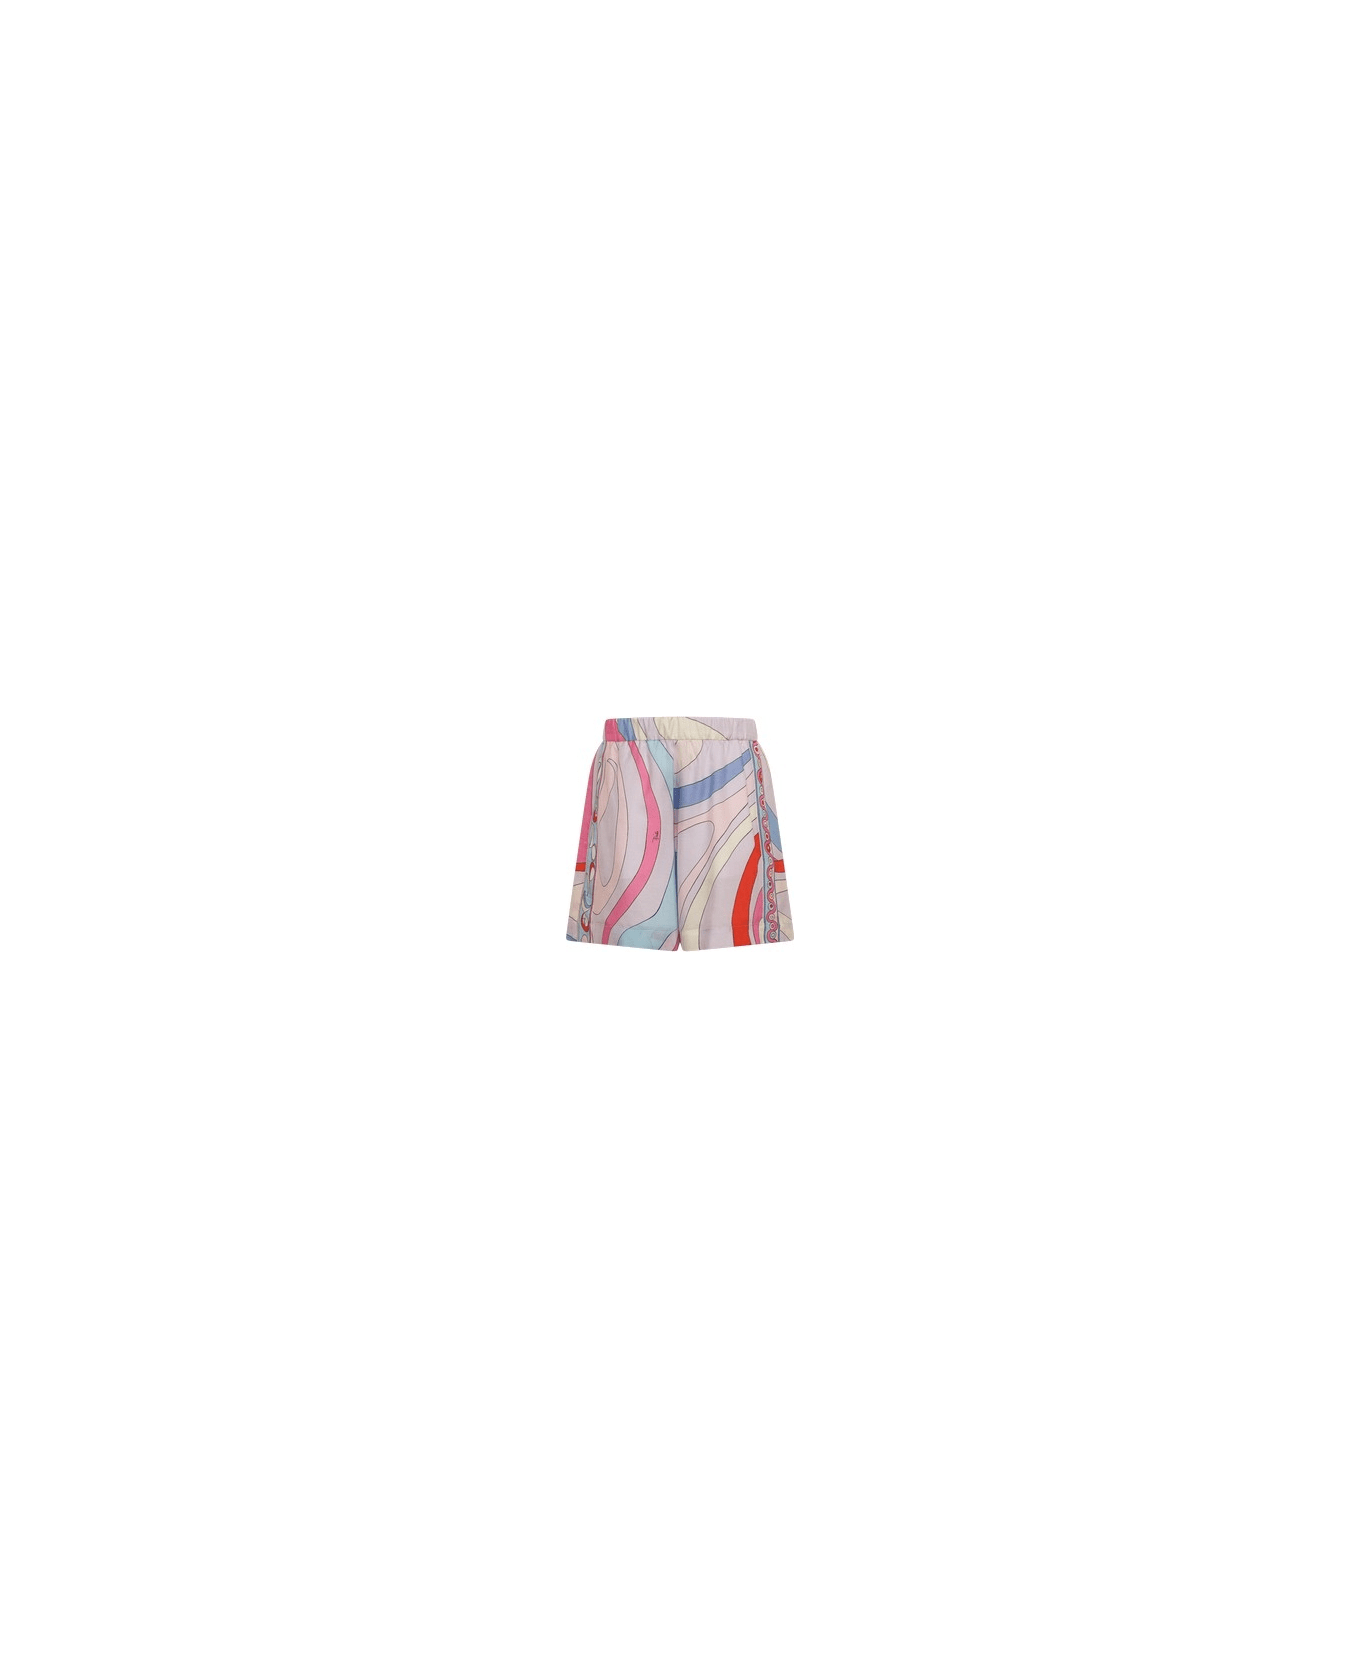 Pucci Shorts With Iris Print - Cream